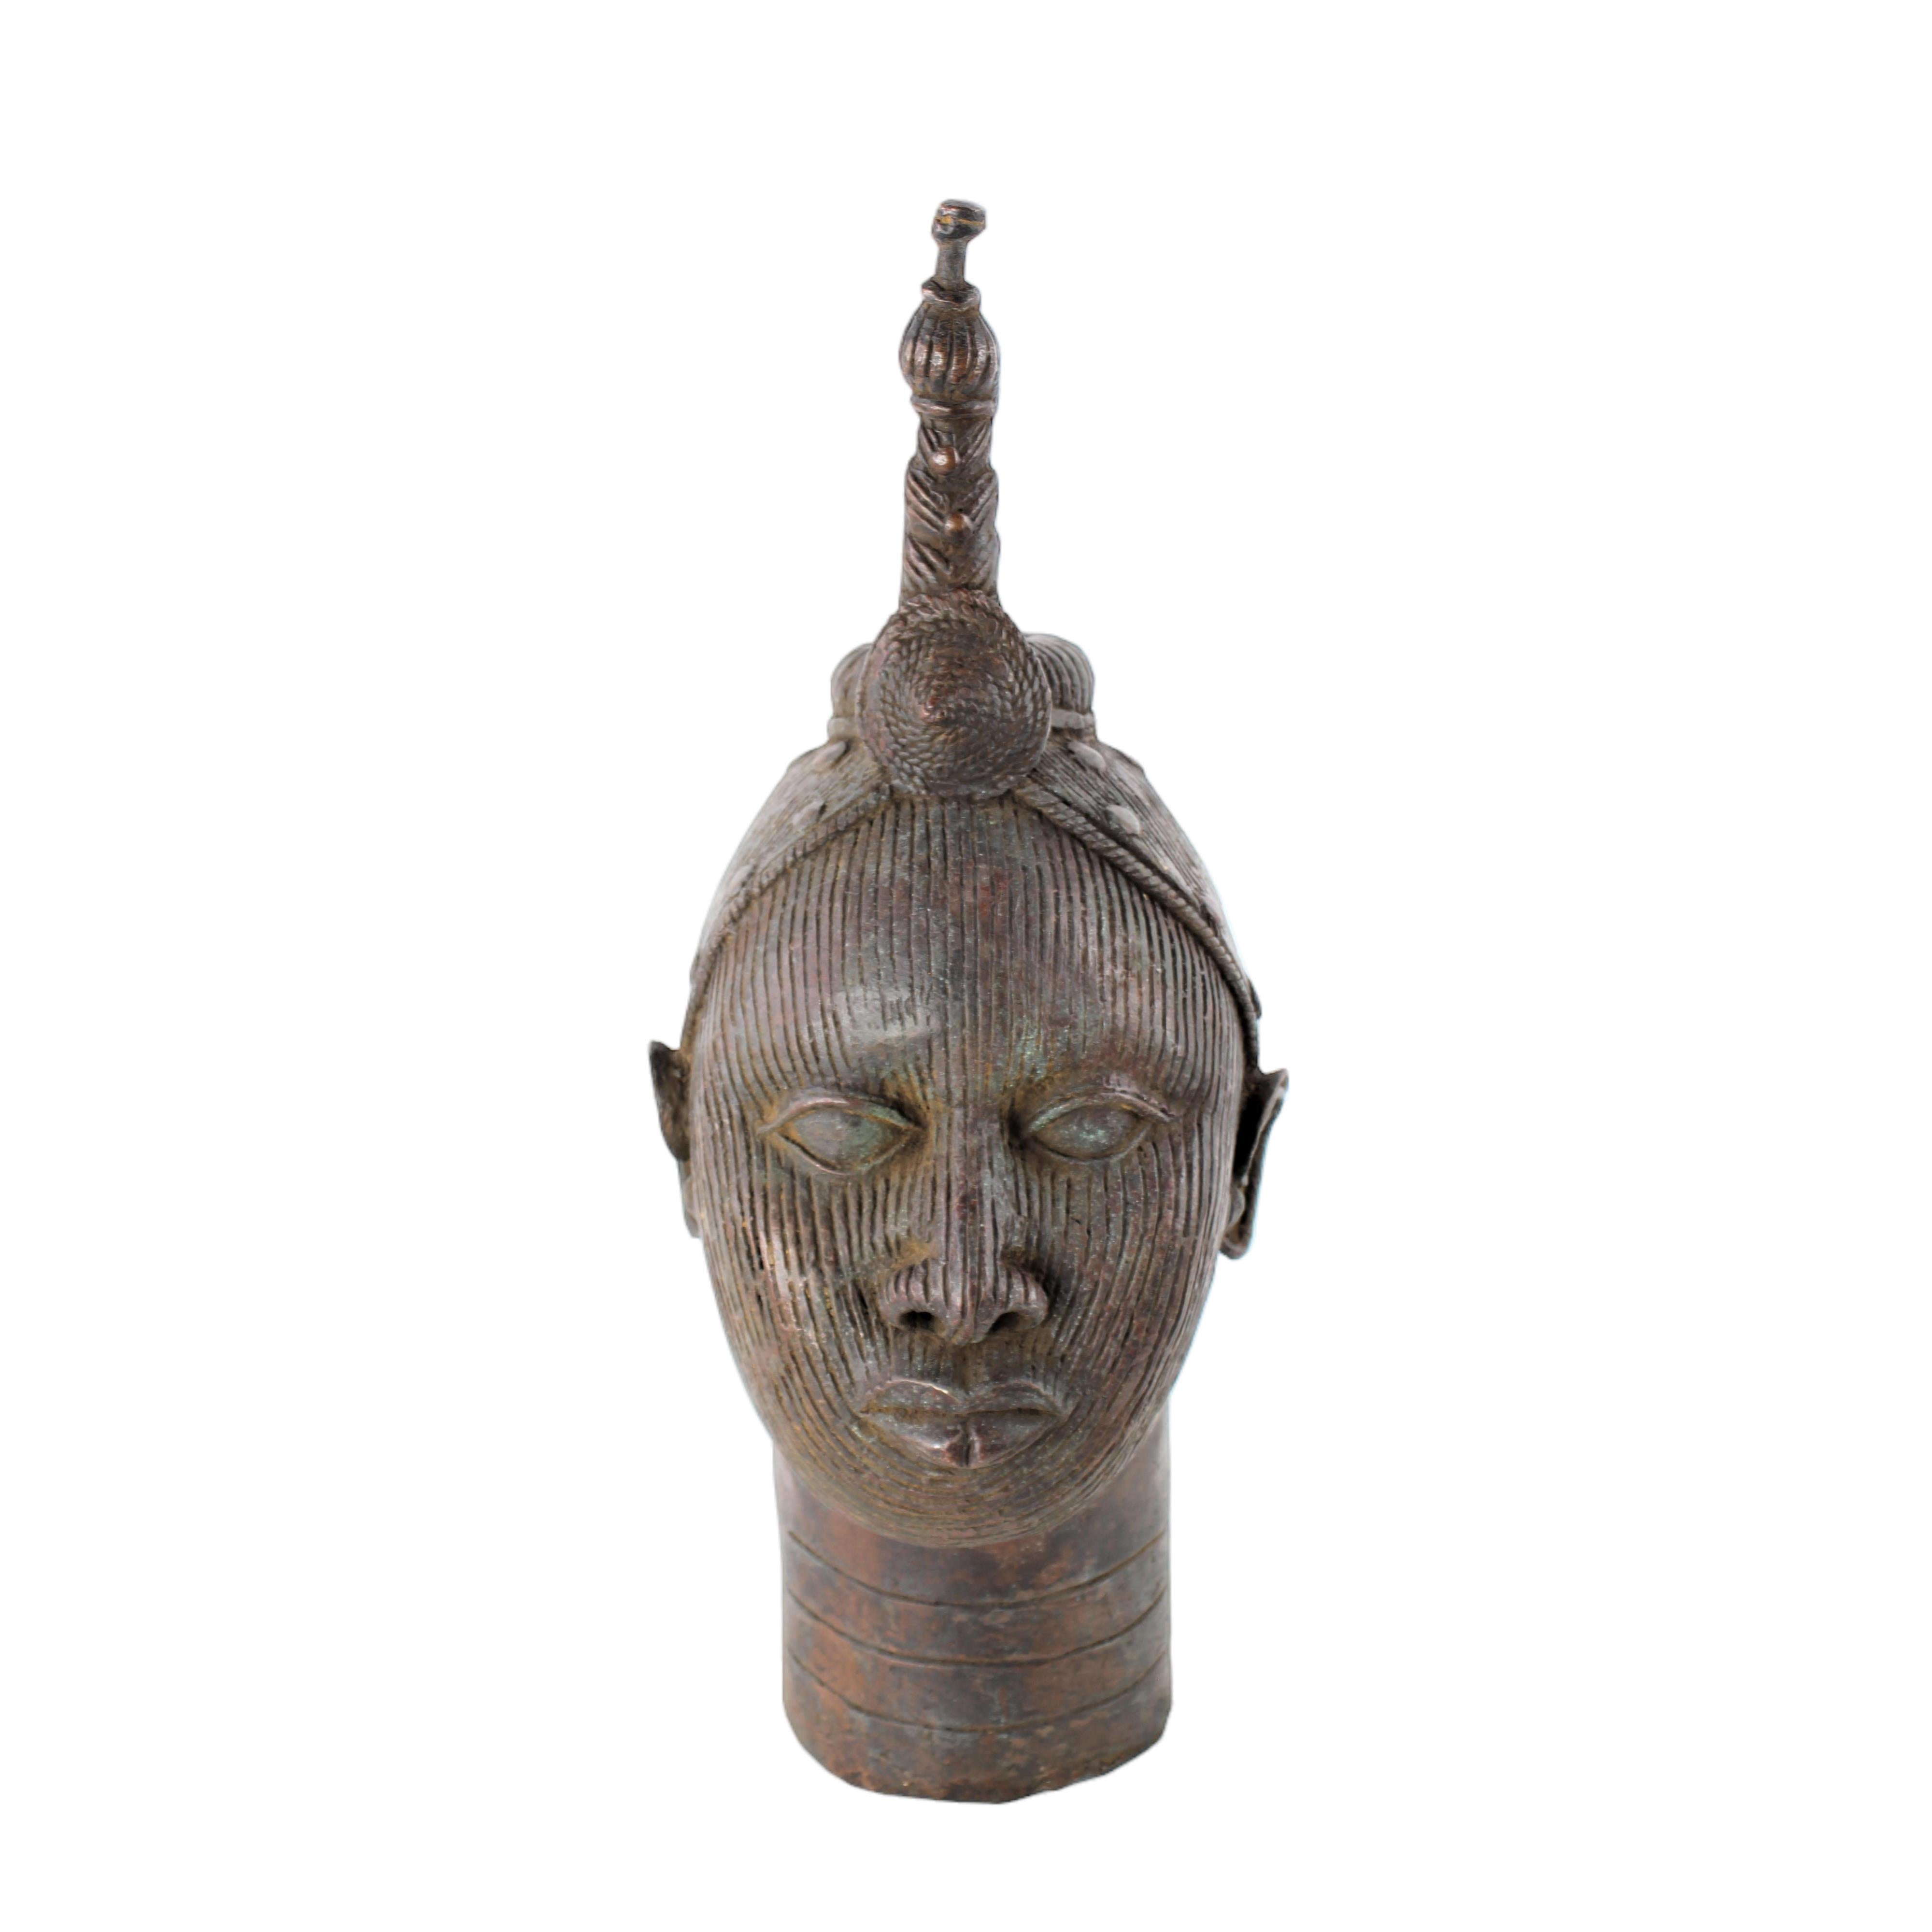 Yoruba Tribe Heads ~15.0" Tall